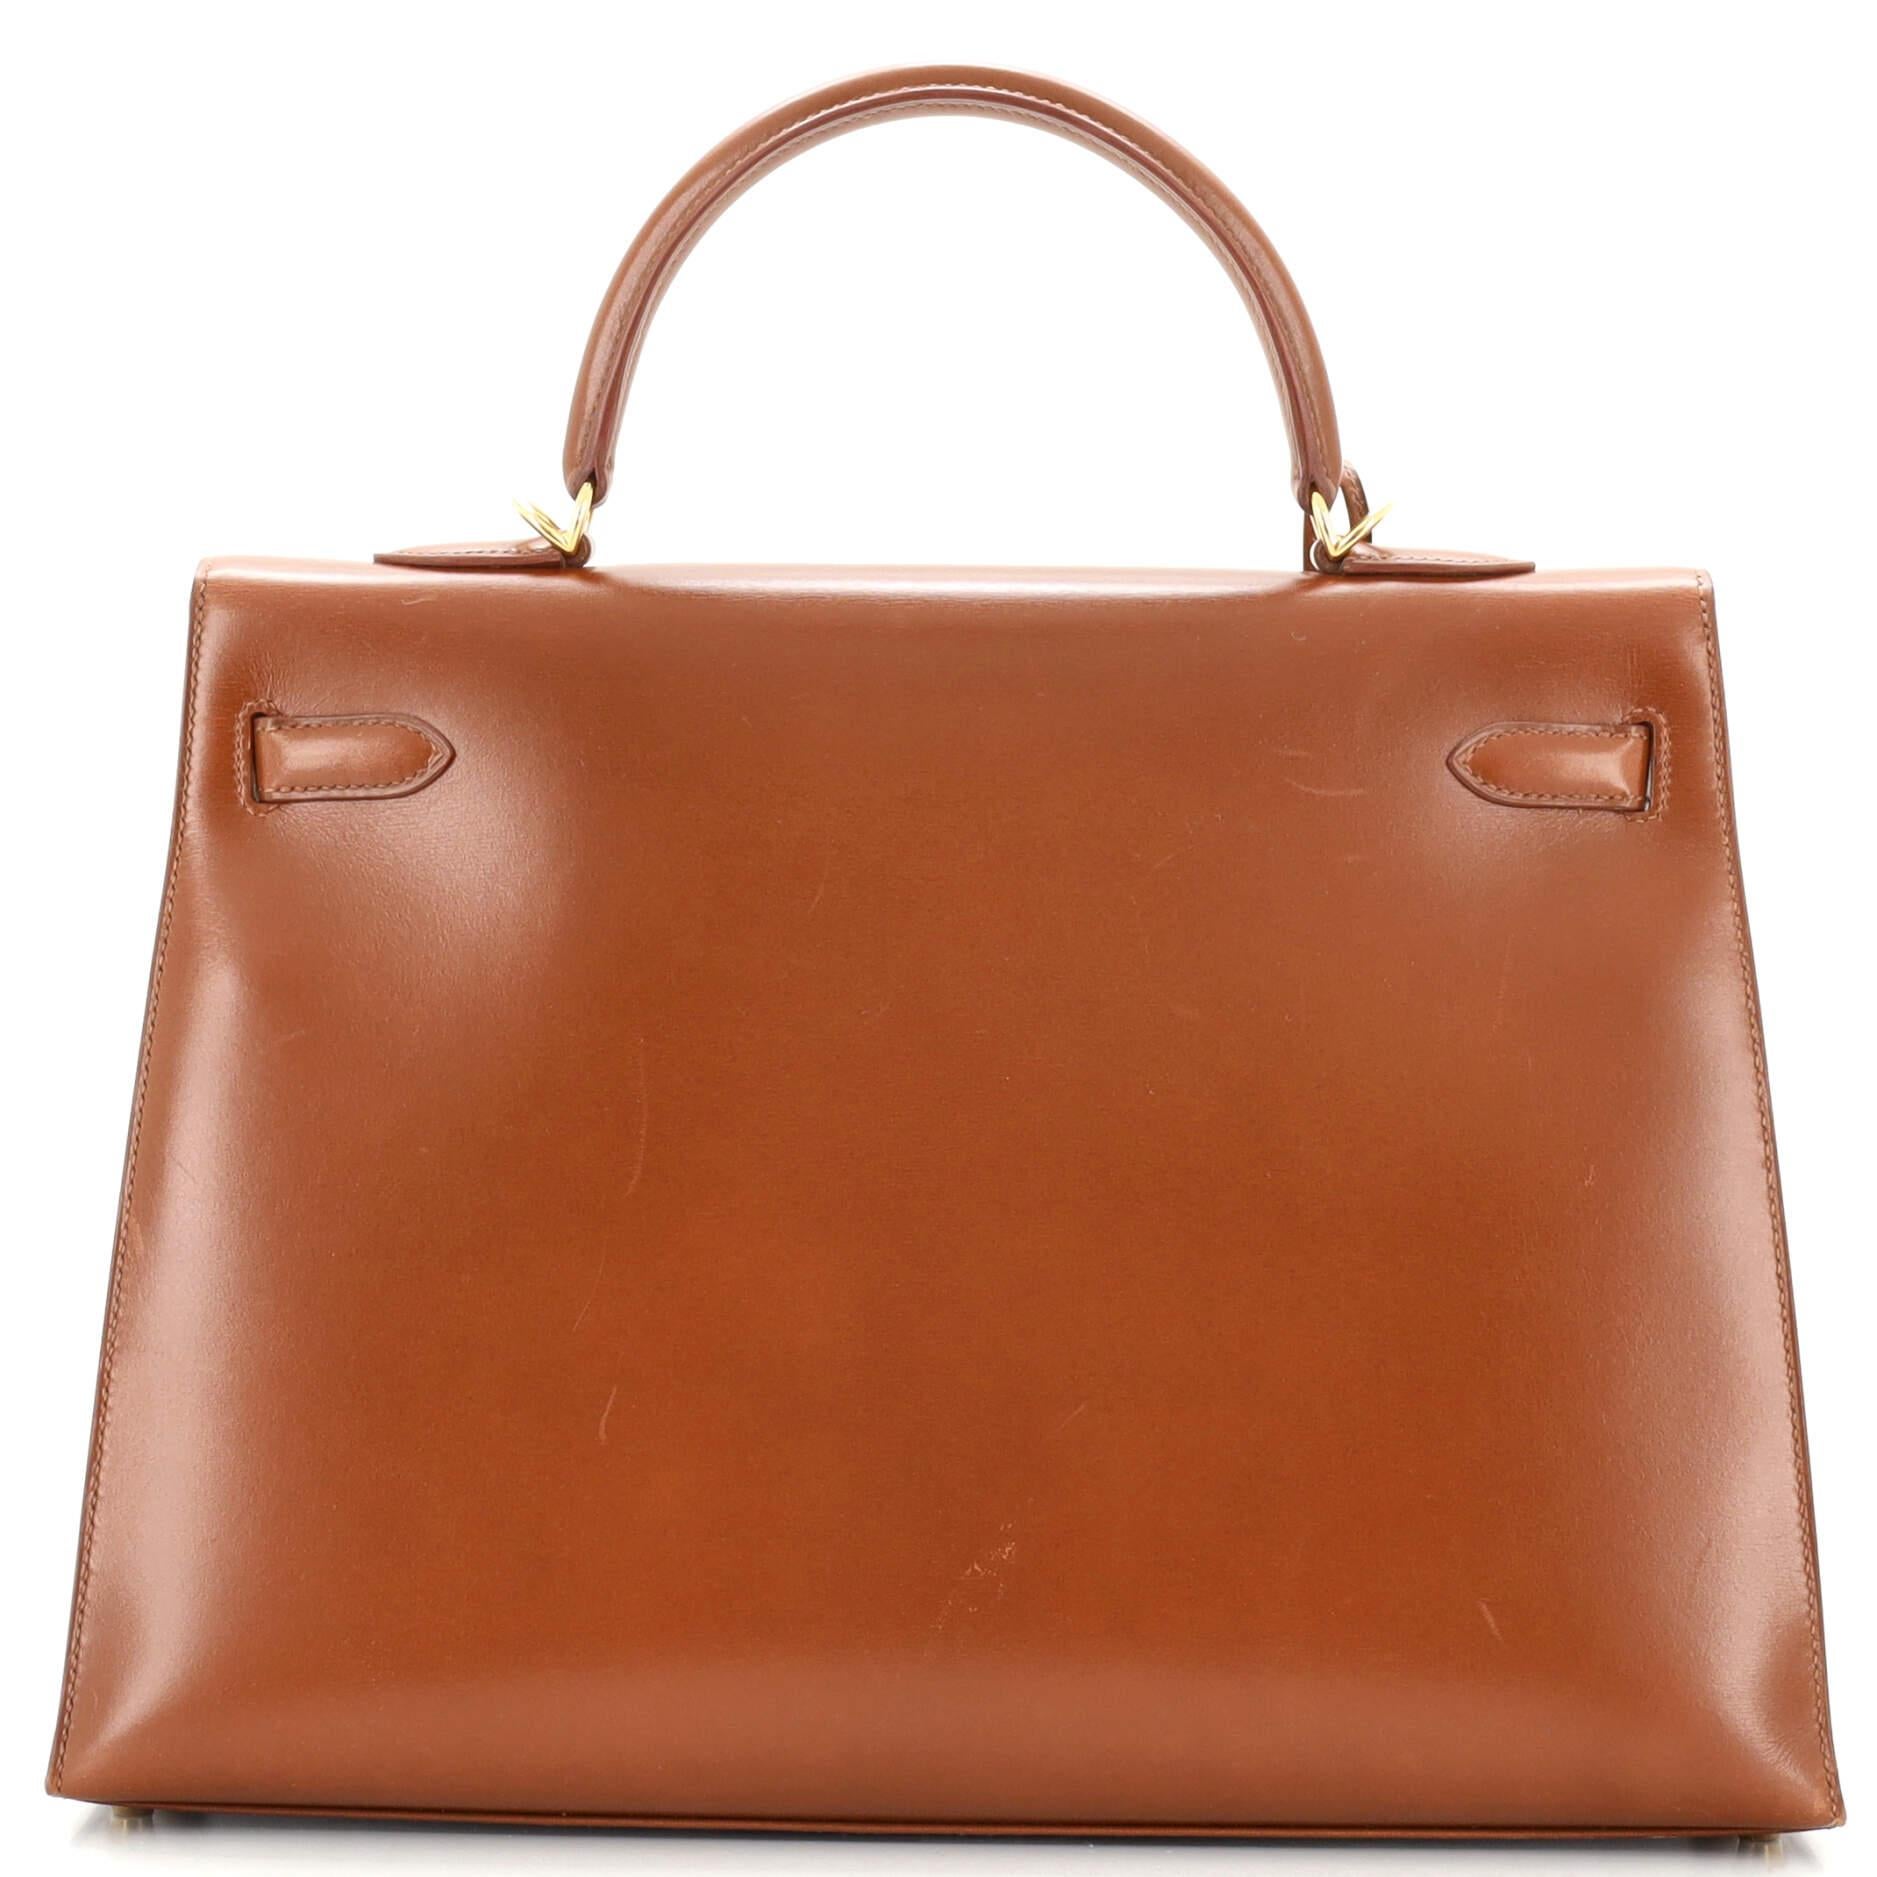 Brown Hermes Kelly Handbag Fauve Box Calf with Gold Hardware 35